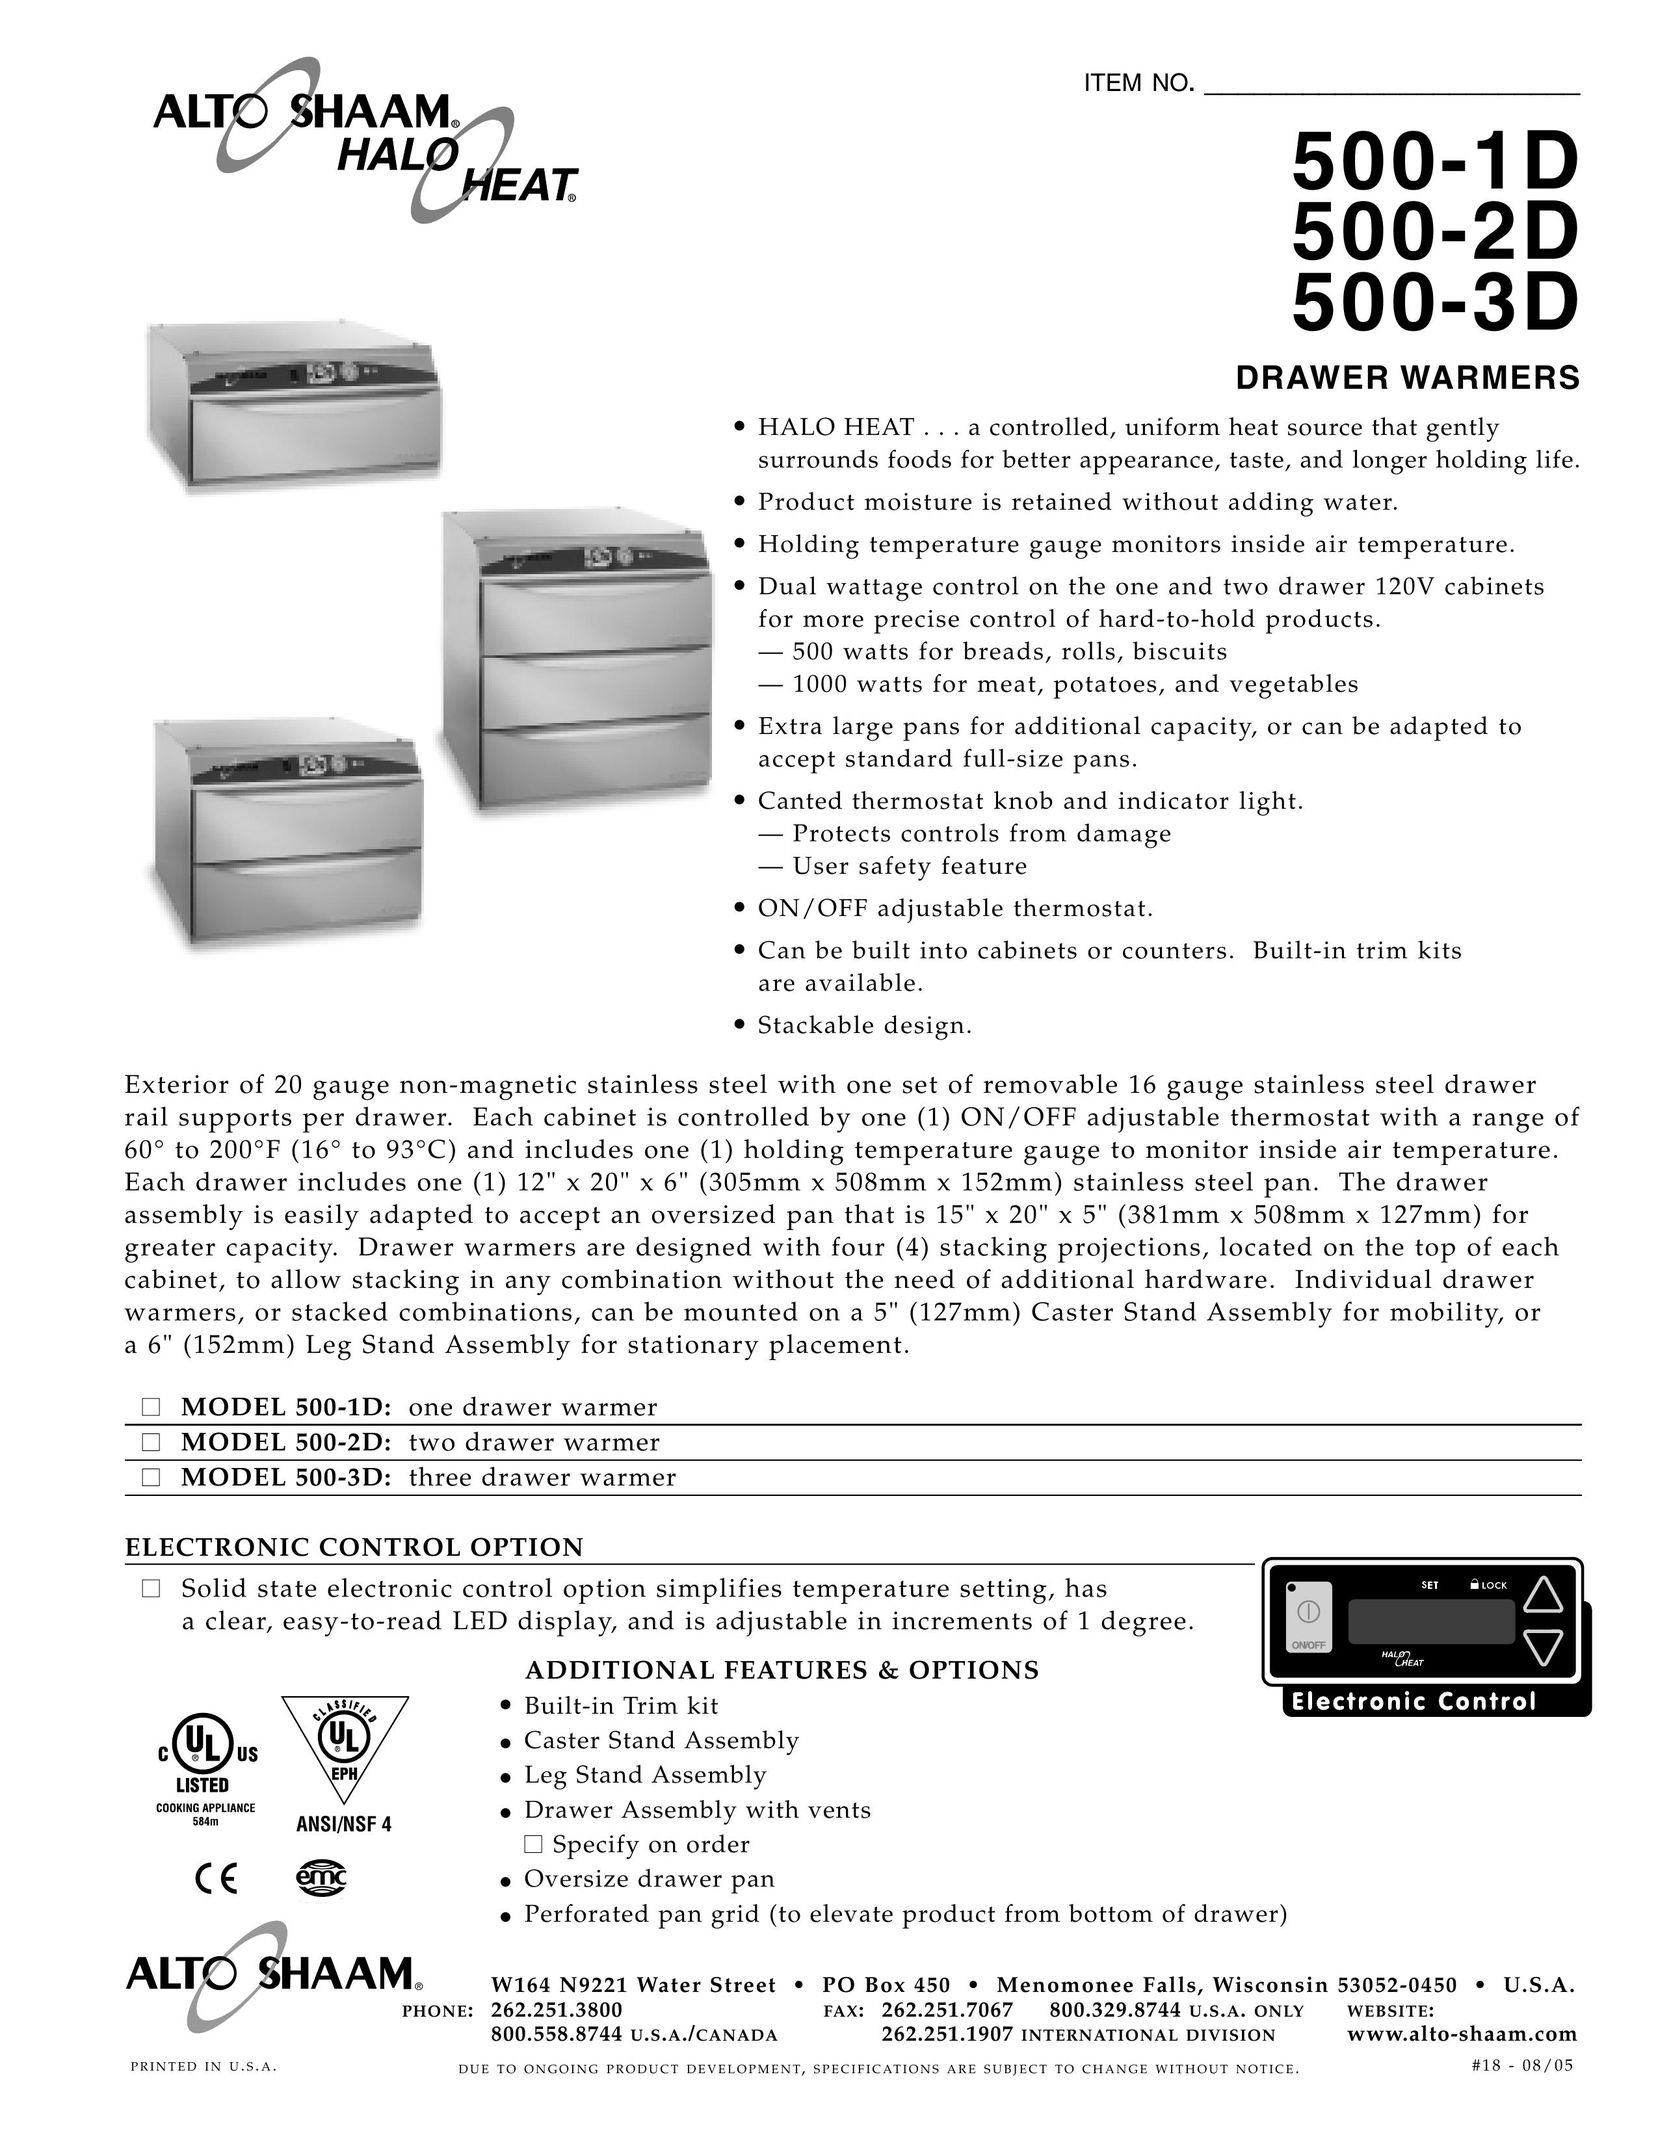 Alto-Shaam 500-3D Food Warmer User Manual